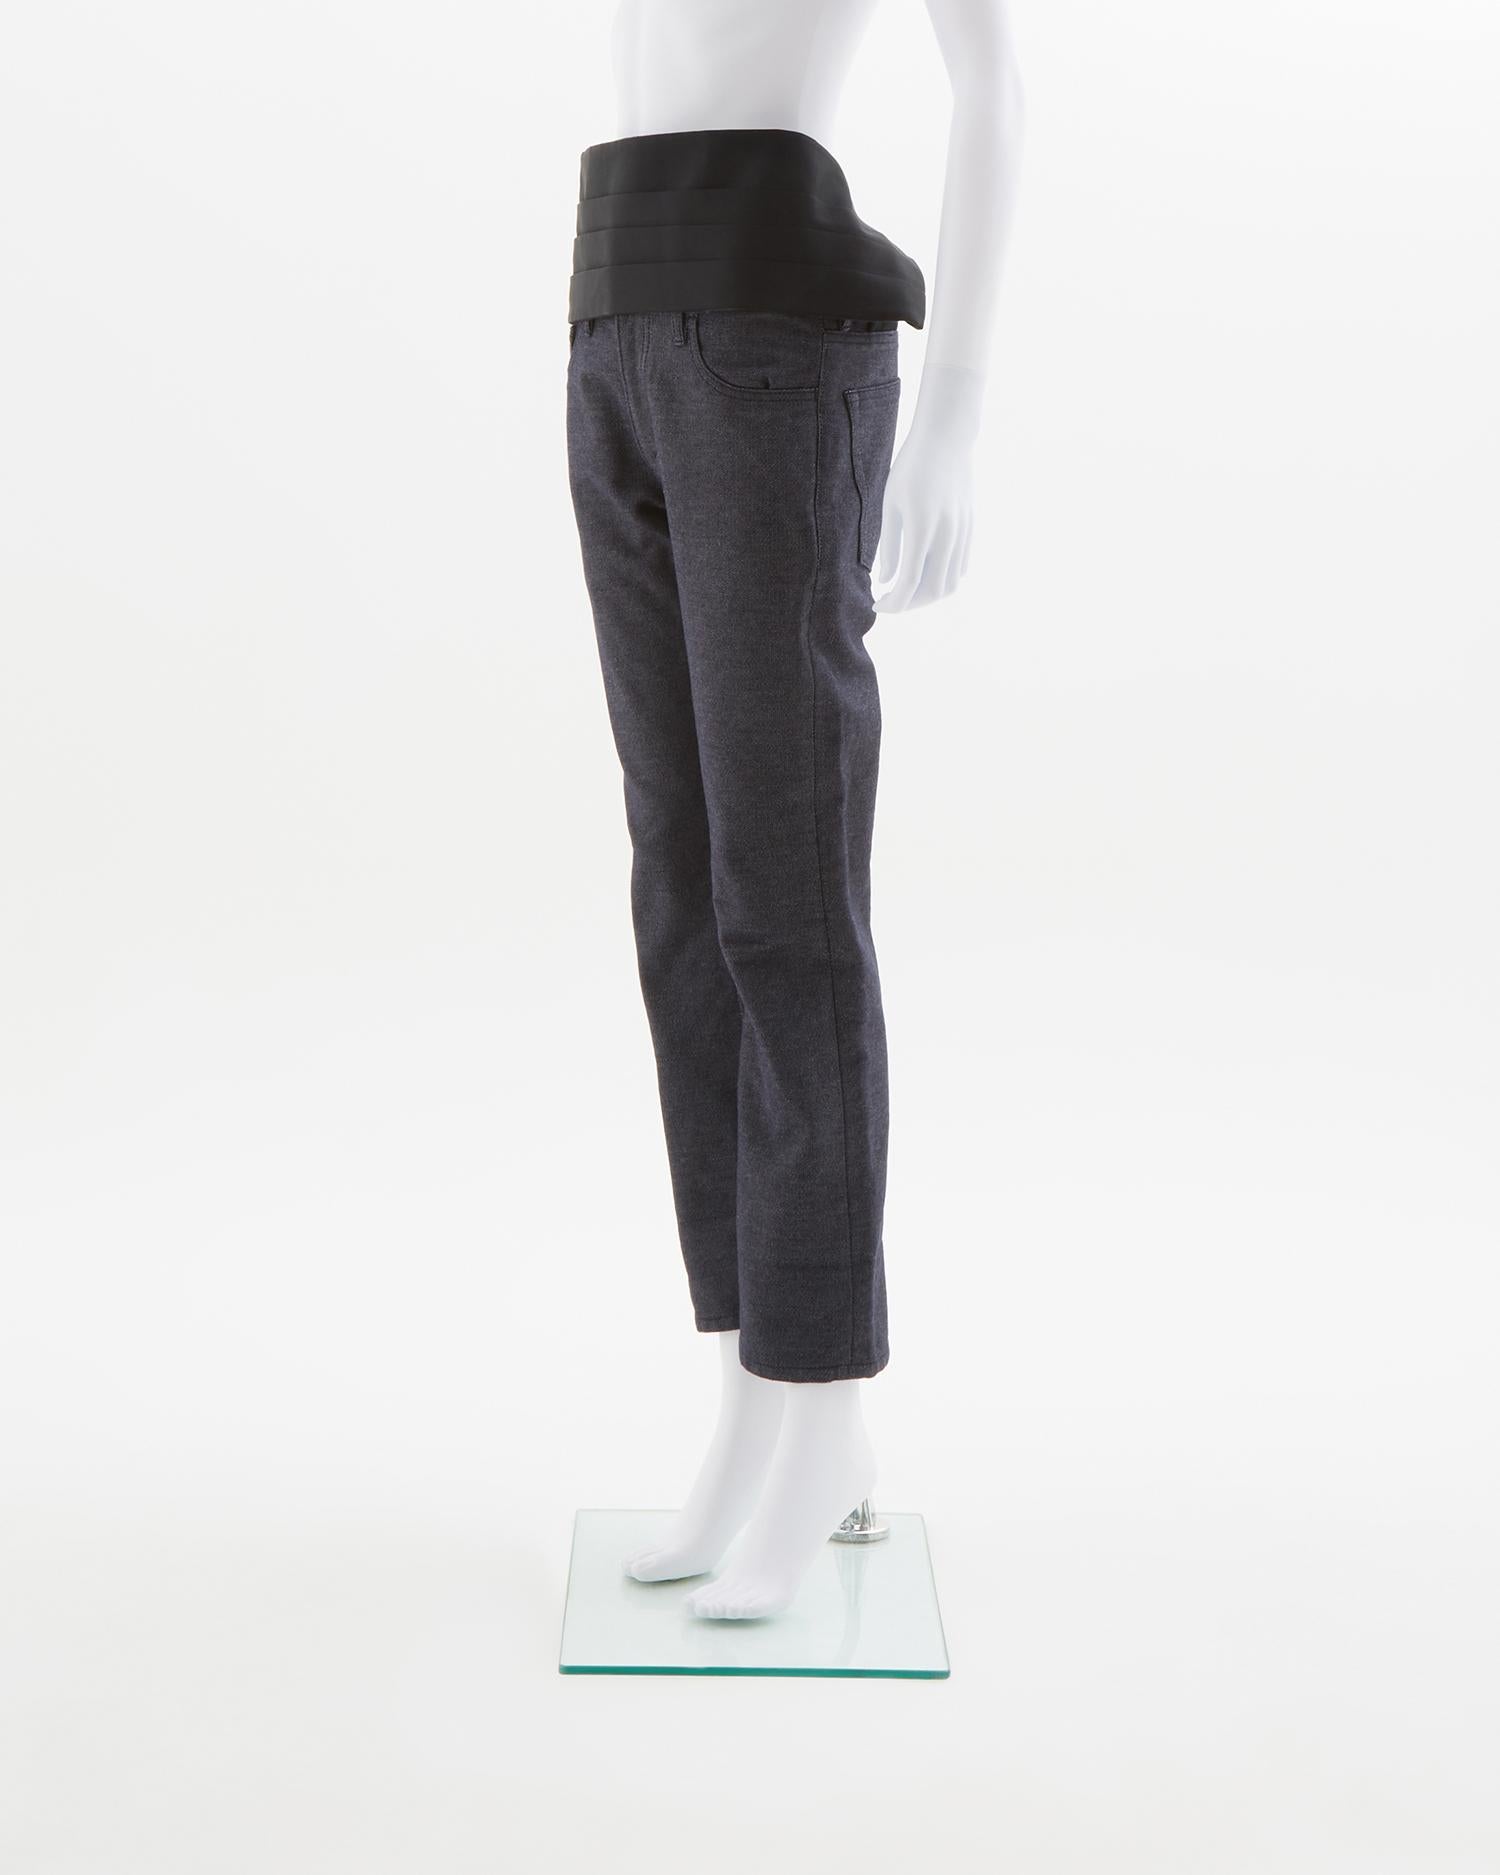 - Runway Look 02
- Sold by Skof.Archive
- Junya Watanabe by Comme des Garçons
- Skinny pants with cummerbund-style waistband 
- Spring Summer 2007
- Made in Japan

Size : FR 36 - EN 40 - UK 8 - US 4 (EU)

Materials : 
Interior 100% cotton
Exterior